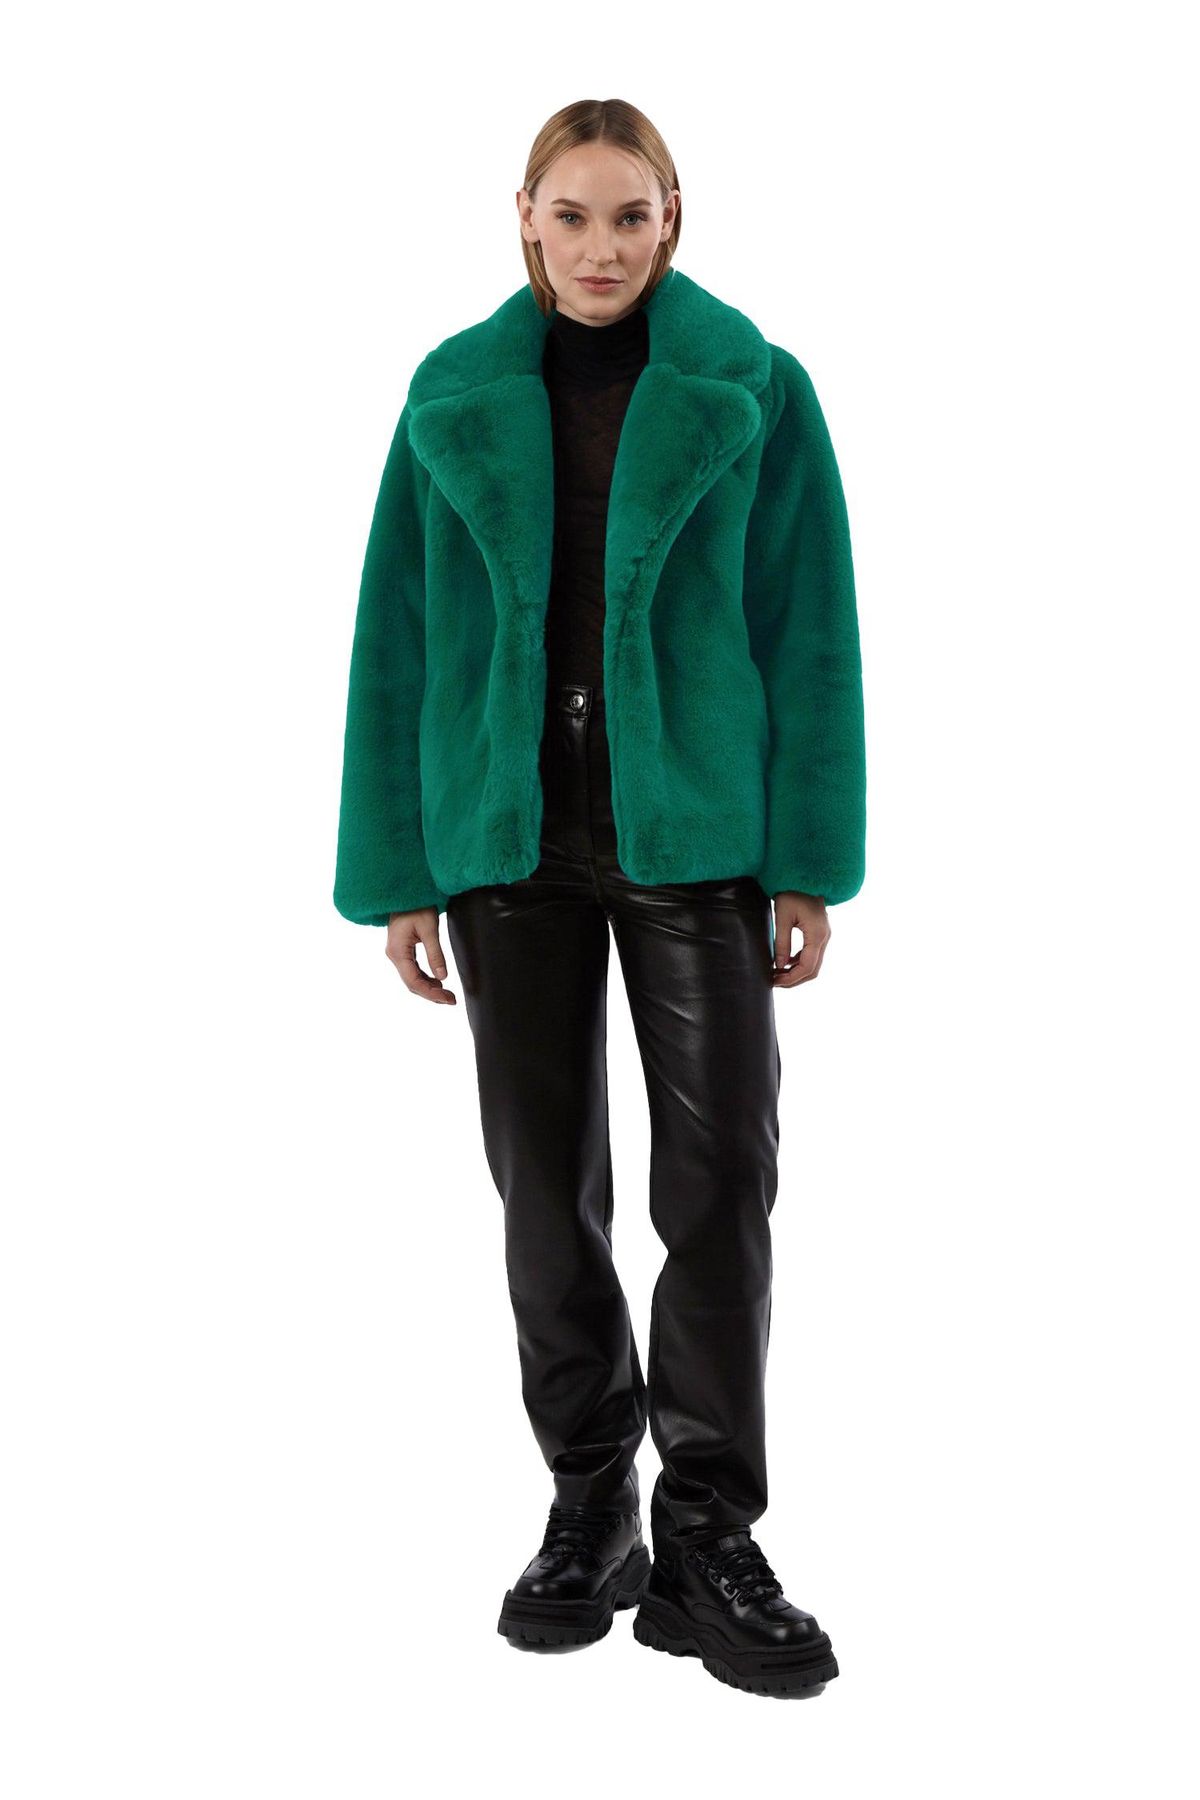 Milly Faux Fur Coat in Verdant Green